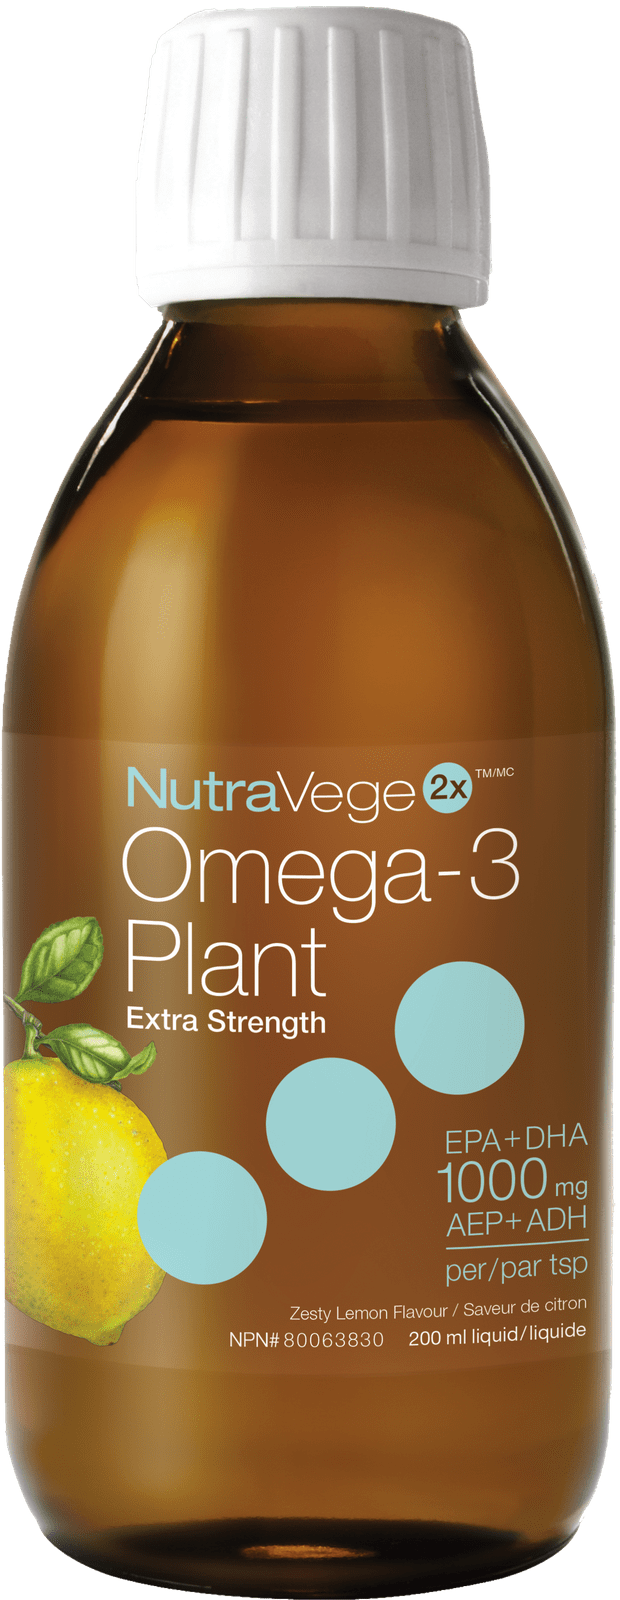 NutraVege2x Omega-3 Plant Extra Strength 1000 mg - Zesty Lemon 200 mL Image 1